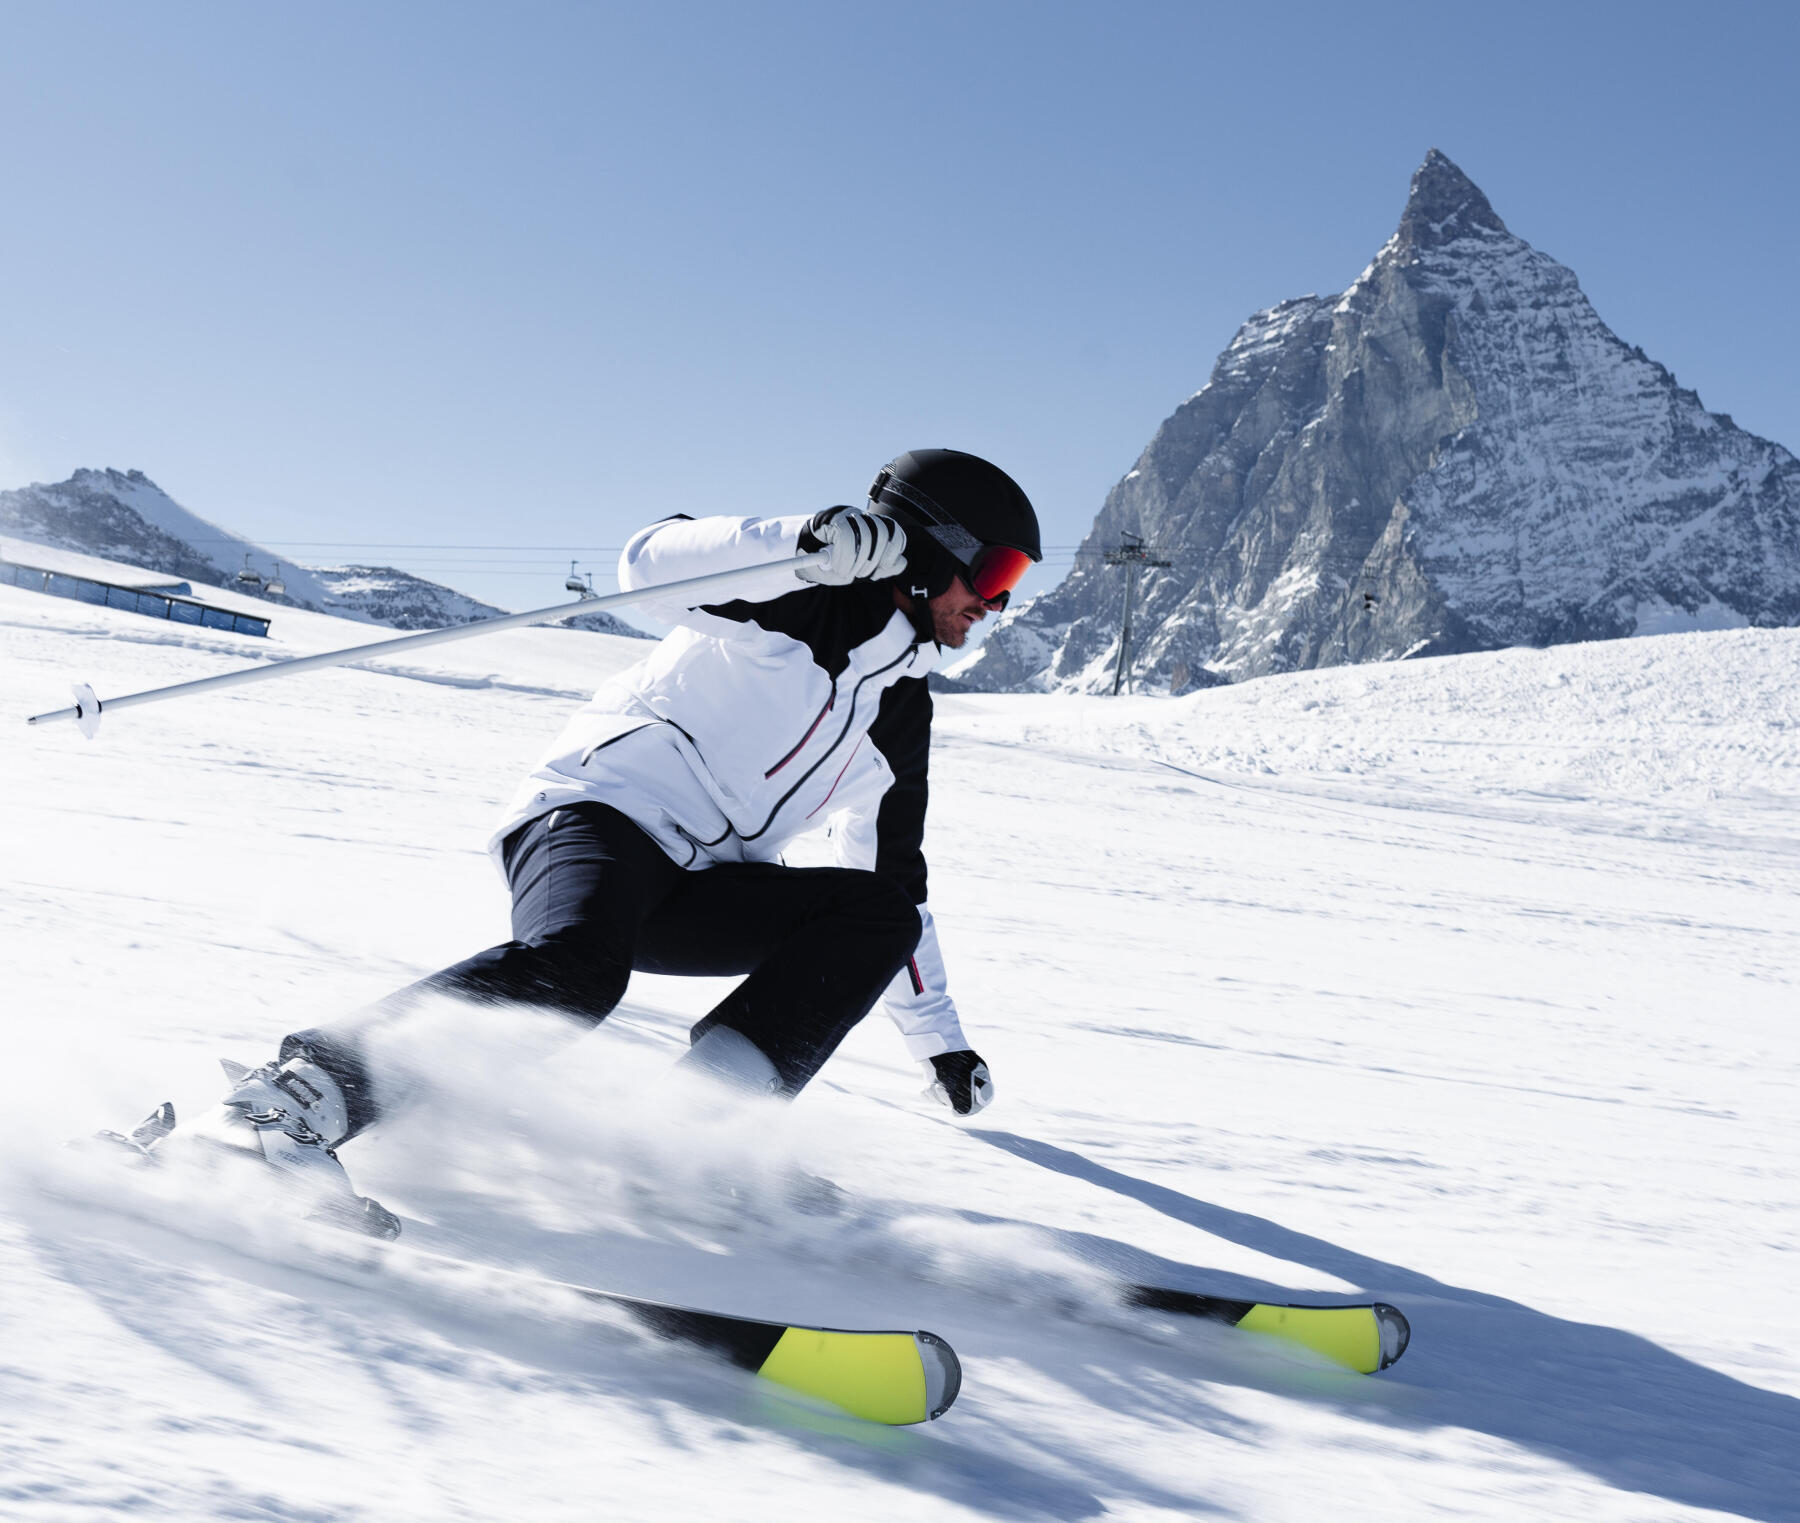 How to choose your downhill ski bindings